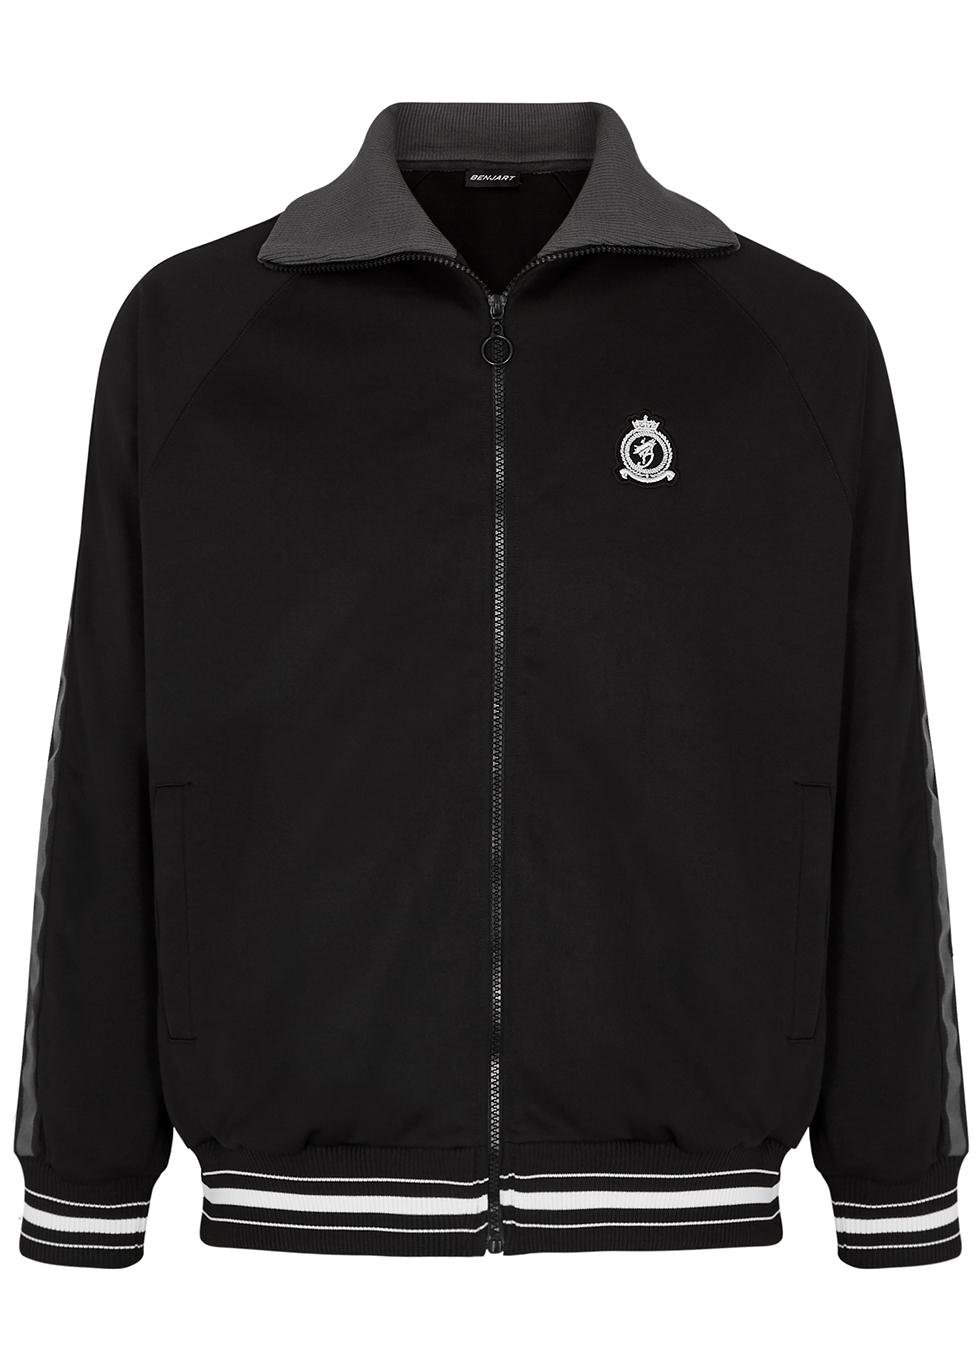 Black logo jersey track jacket by BENJART